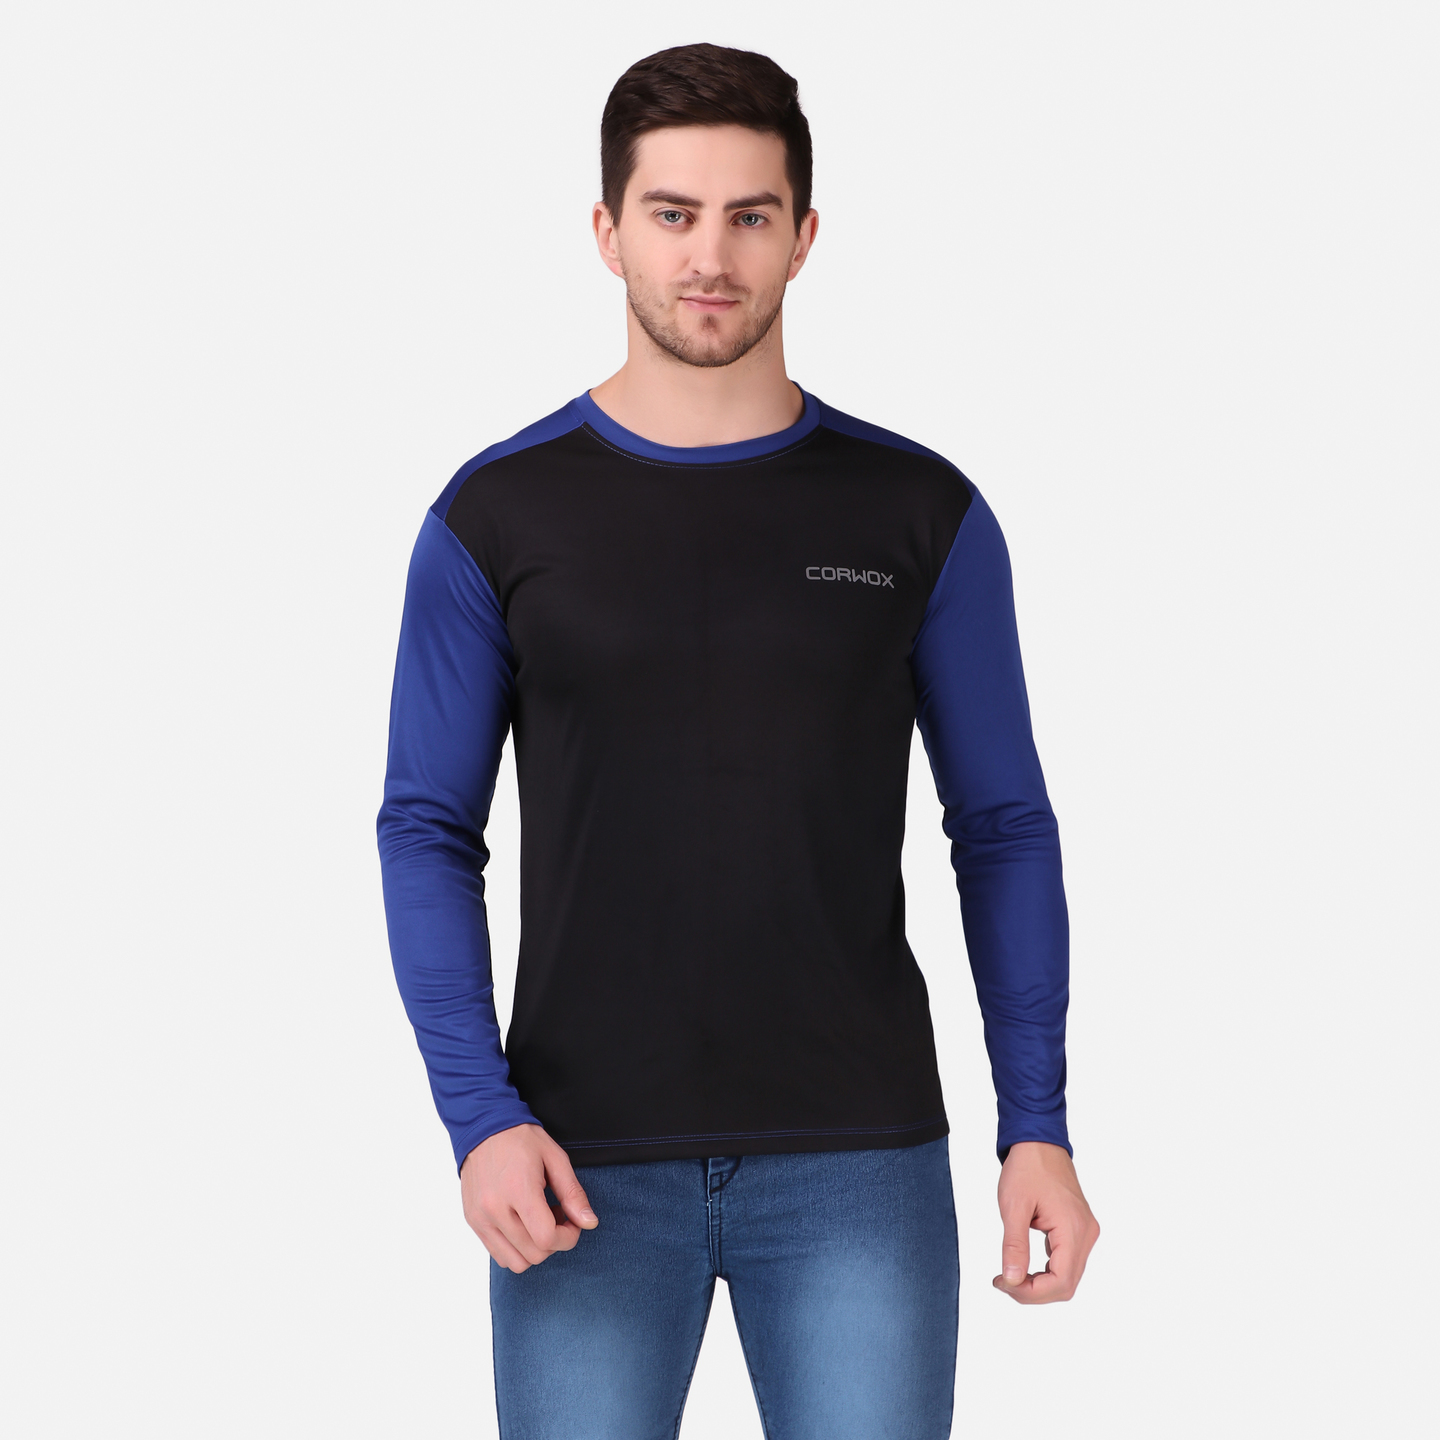 CORWOX Mens Dark Blue & Black Full Sleeves T-Shirt